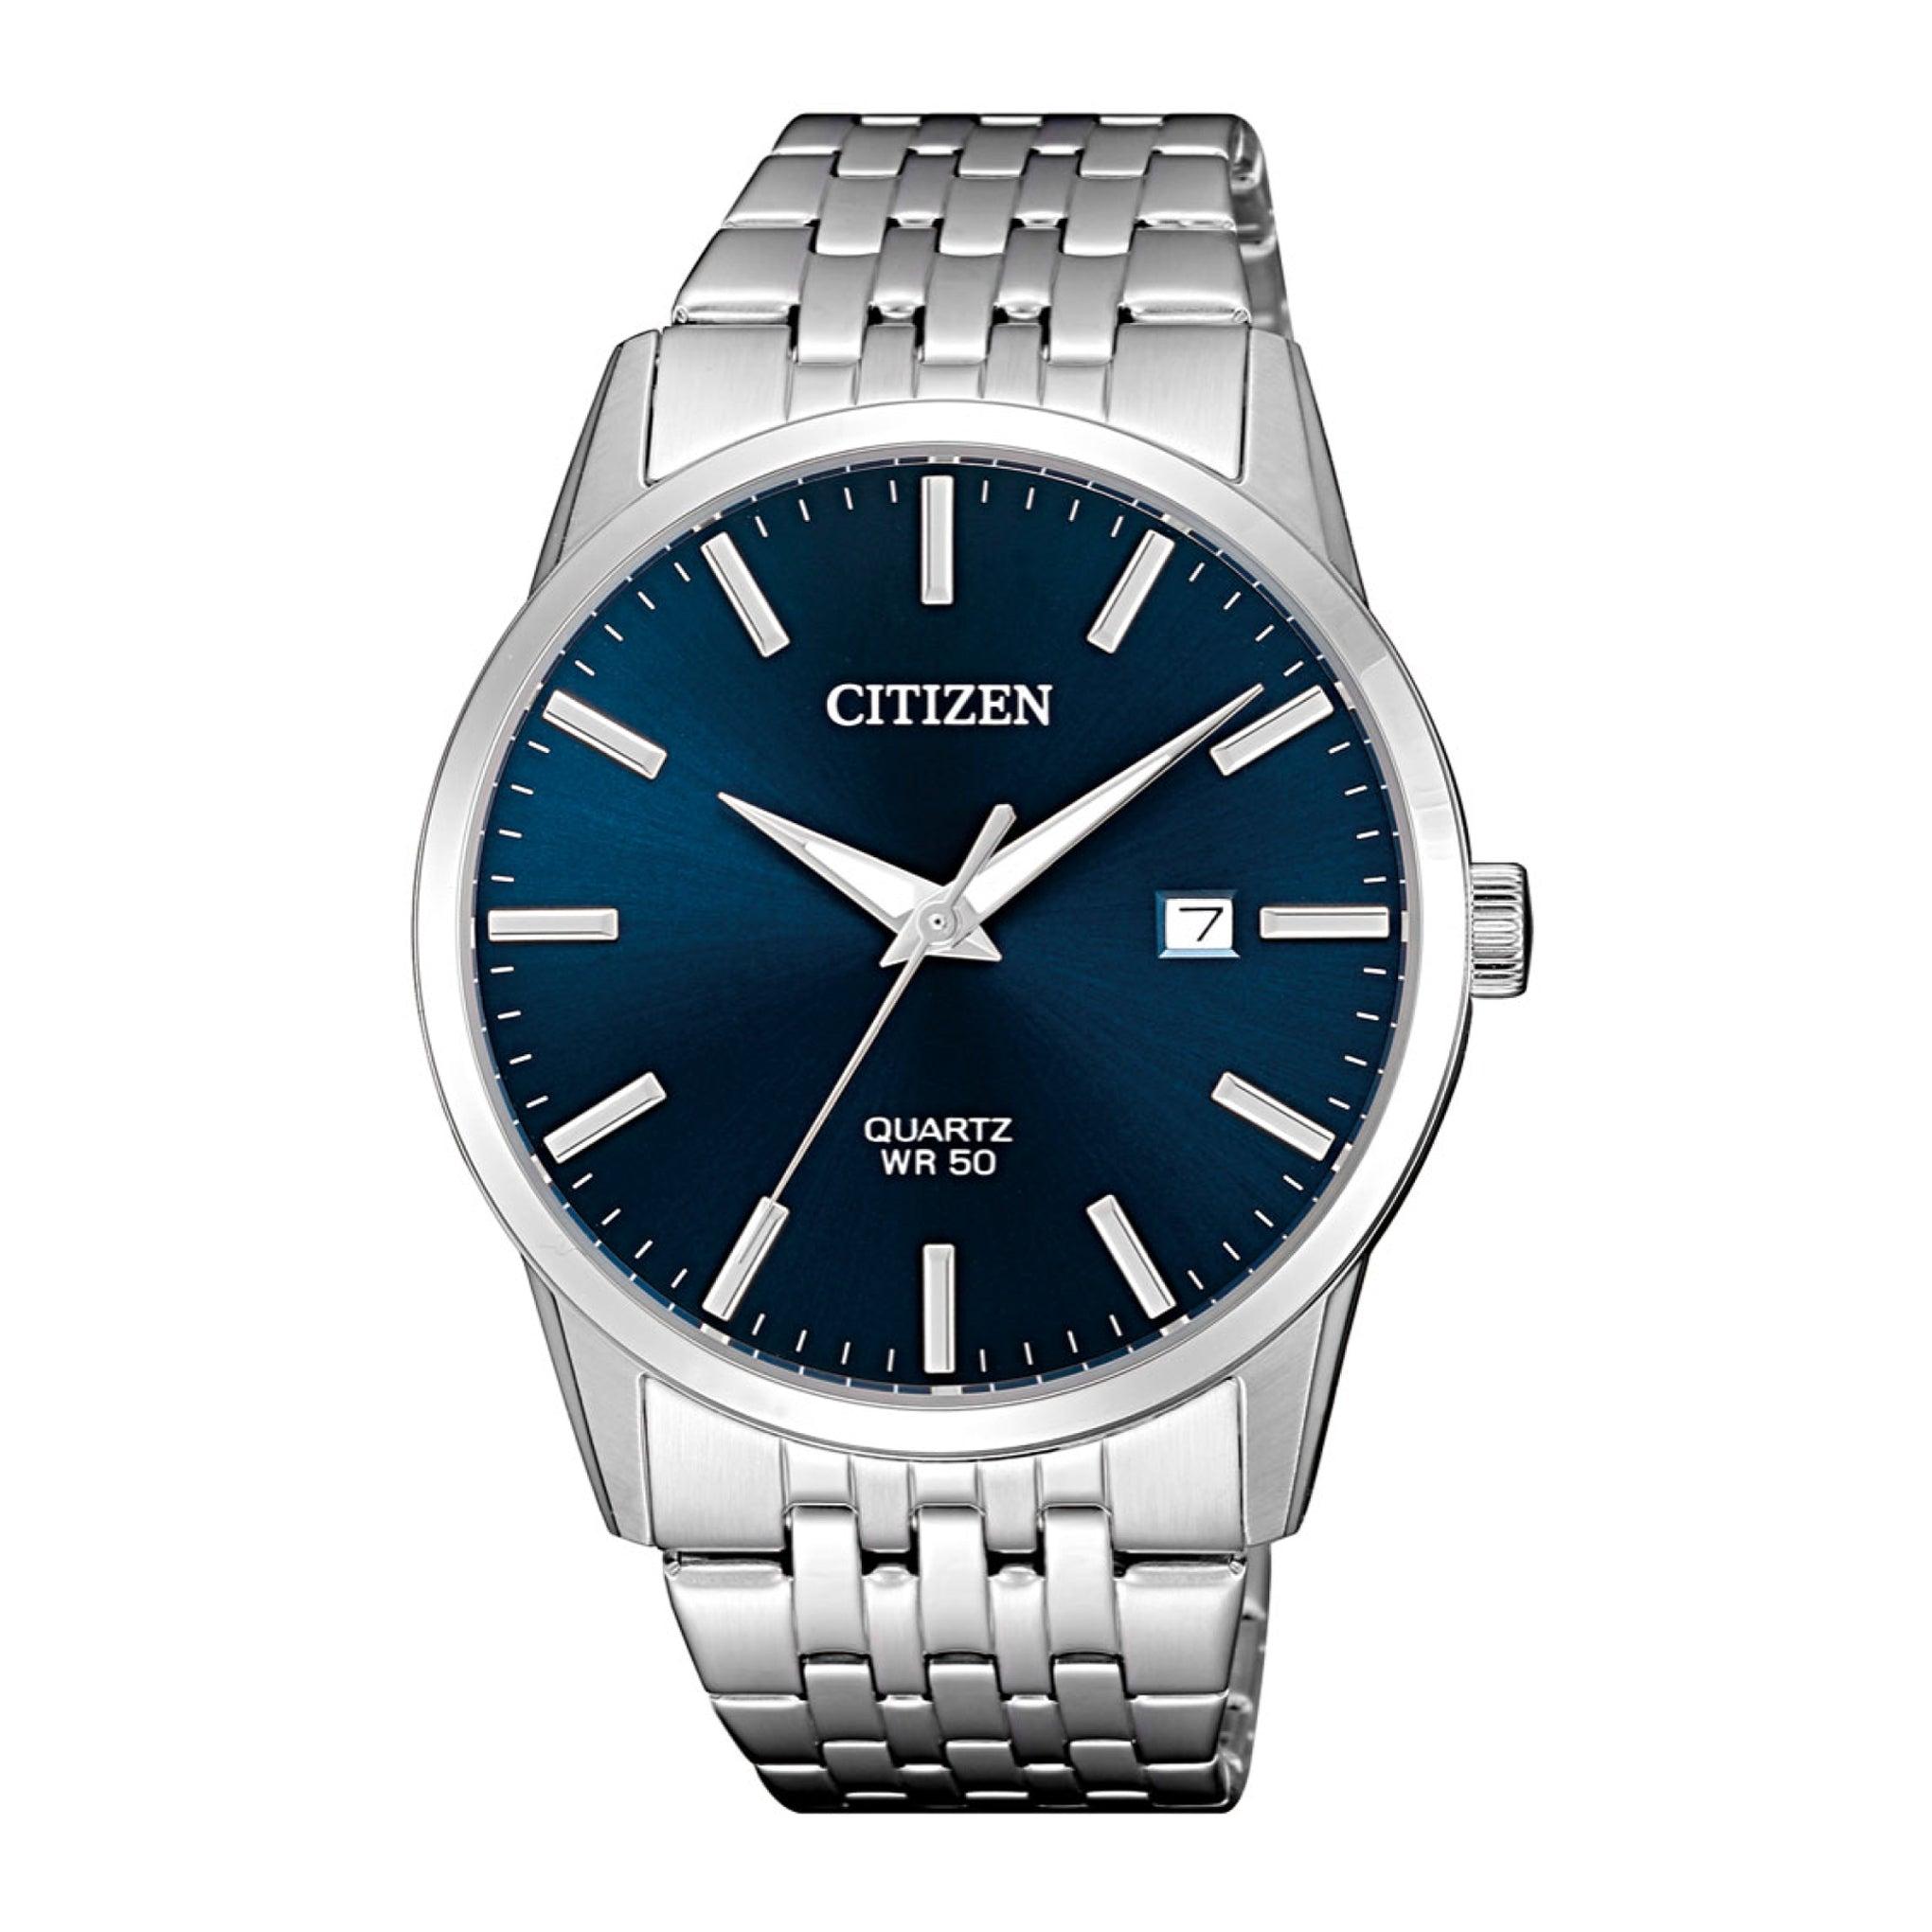 Citizen Men's Analog Quartz Royal Blue Dial Stainless Steel Watch Bi5000-87l